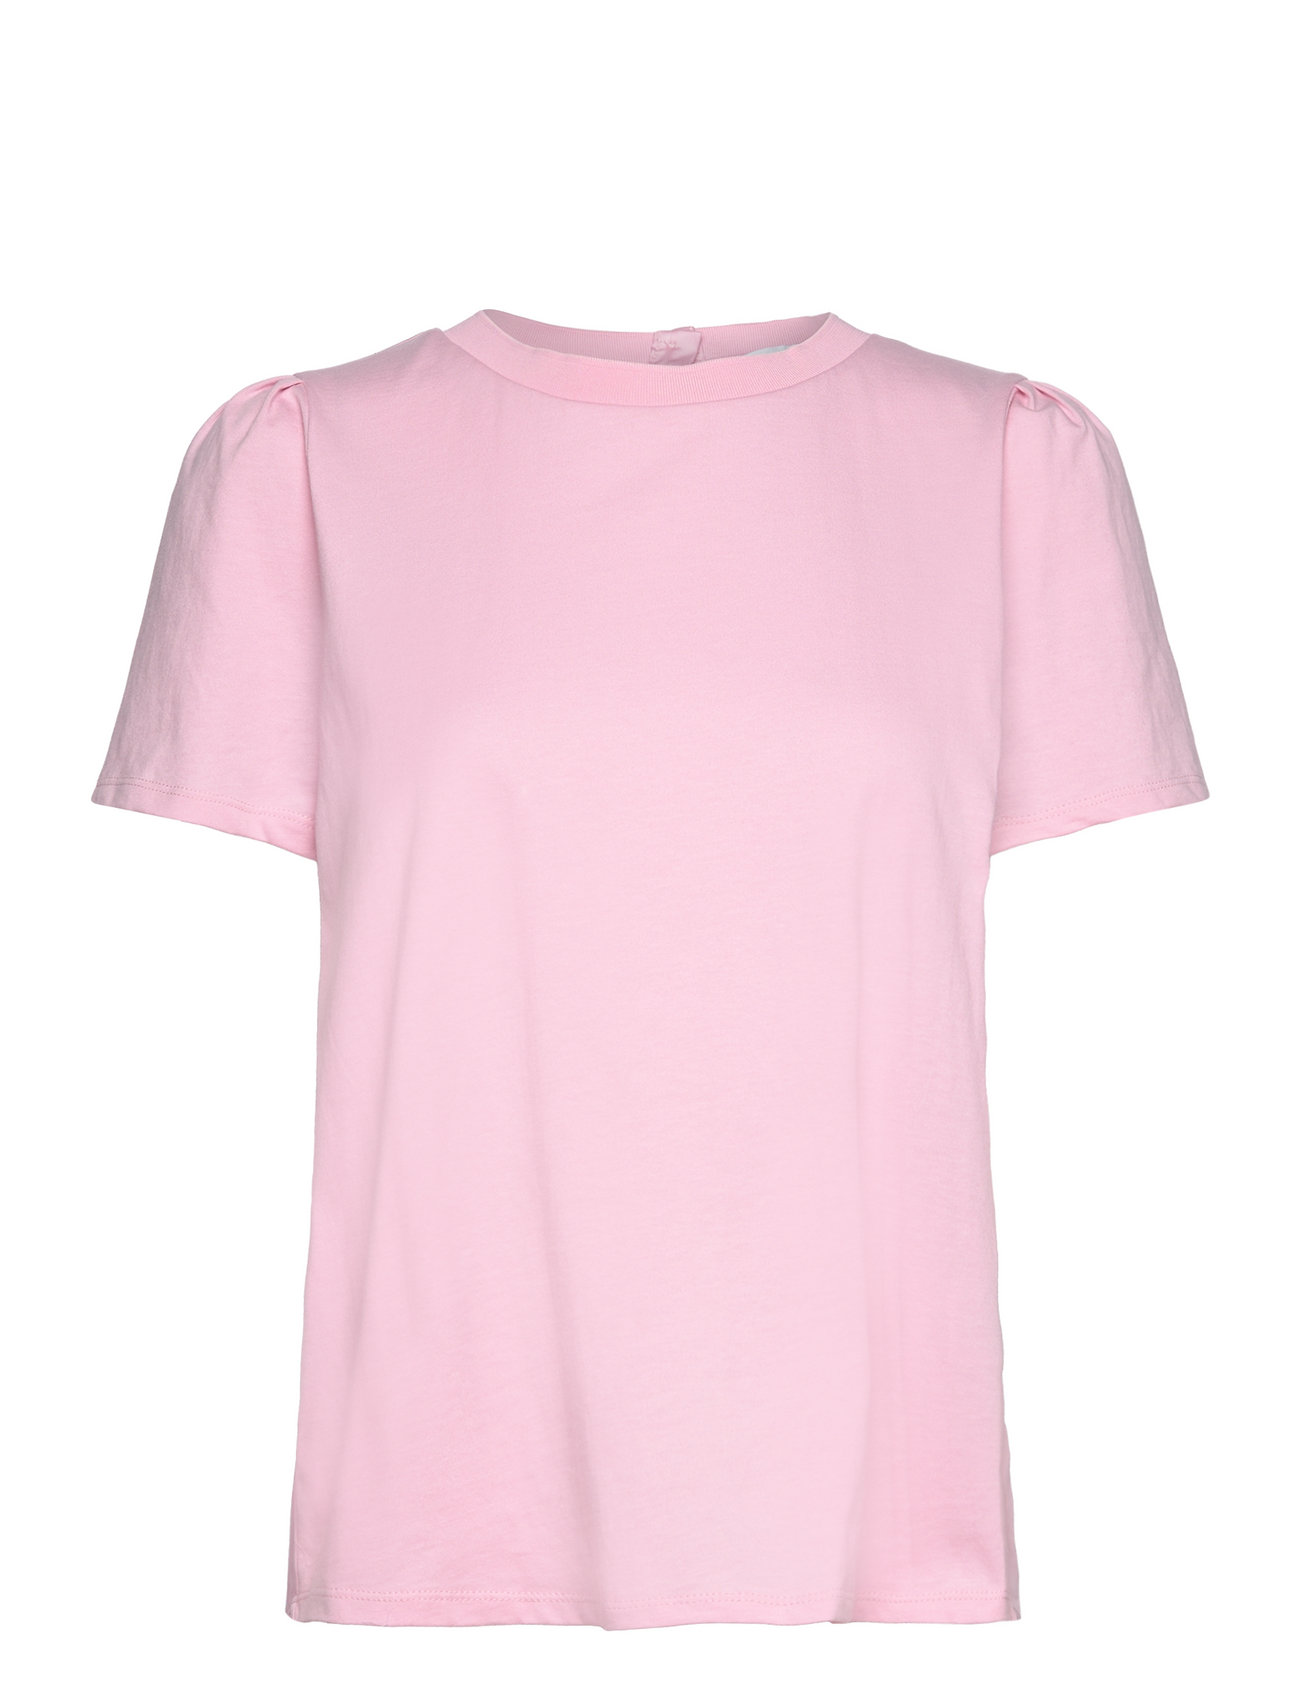 Lr-Kowa Tops T-shirts & Tops Short-sleeved Pink Levete Room